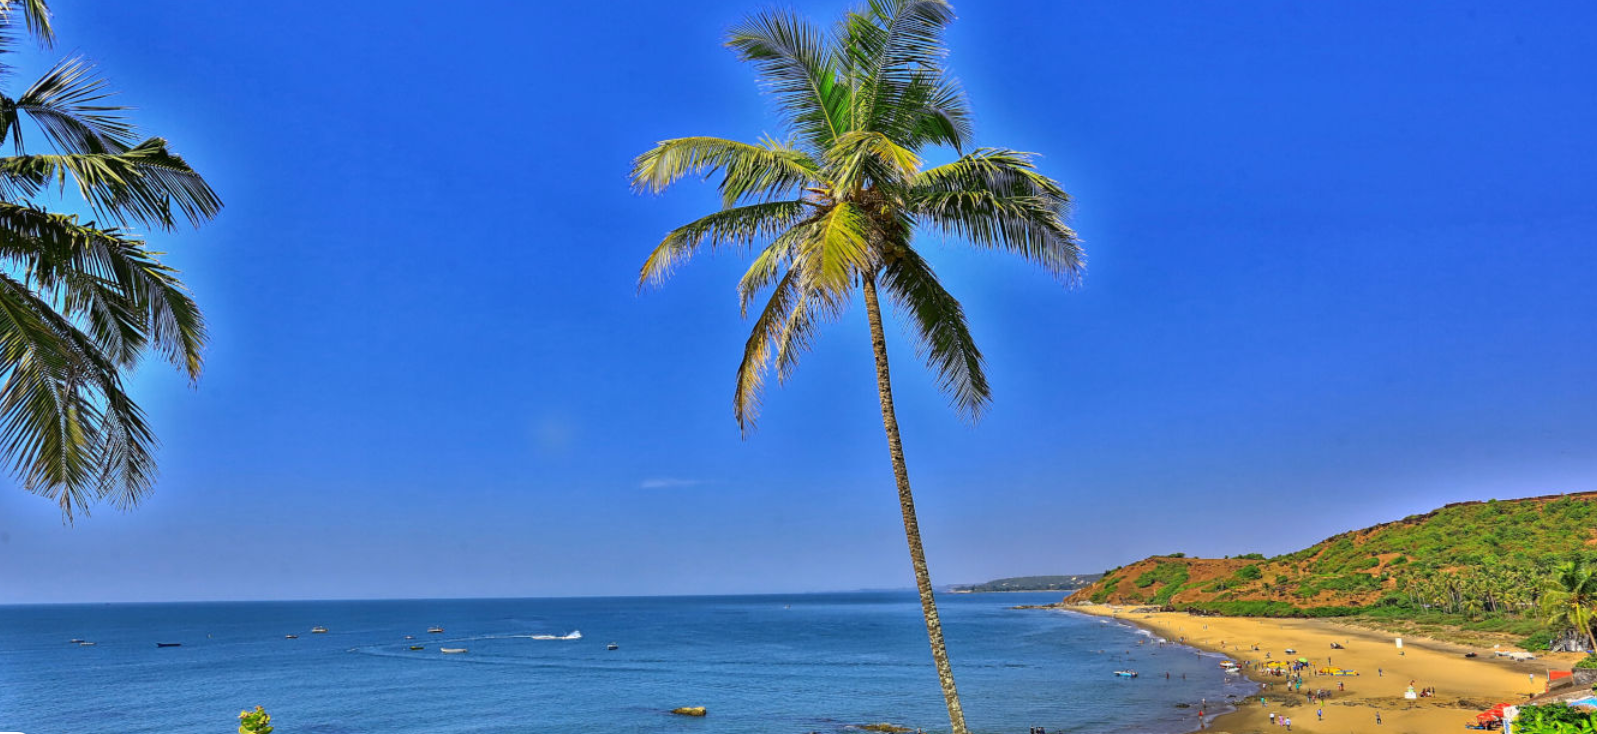 Beautiful Goa weather and beach.